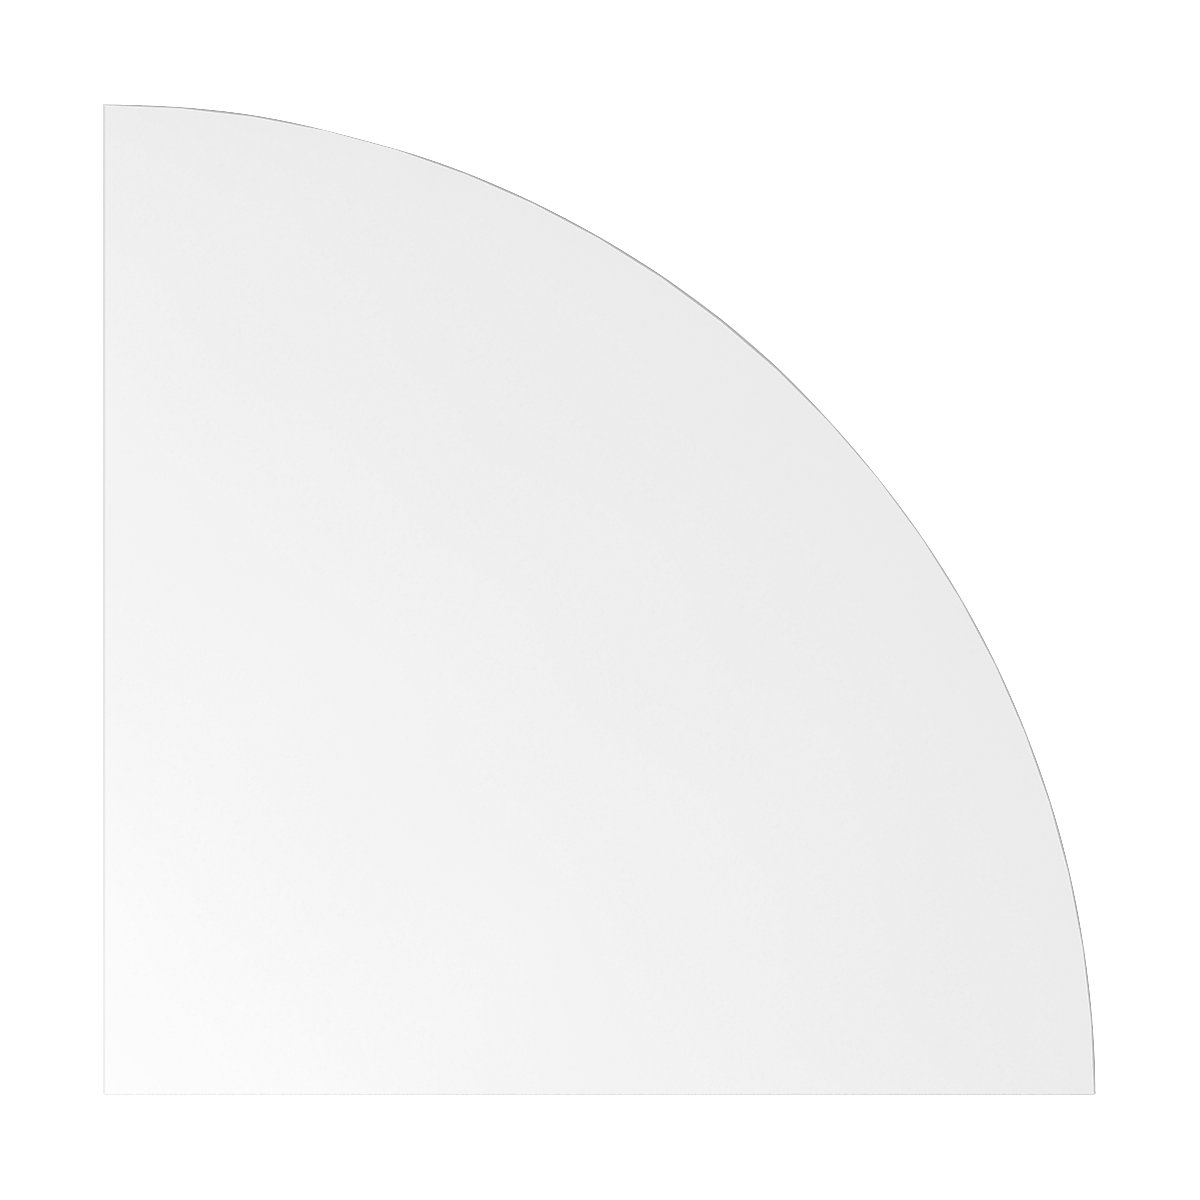 Verbindingsblad VERA-ZWO, b x d = 800 x 800 mm, kwartcirkel, wit-7